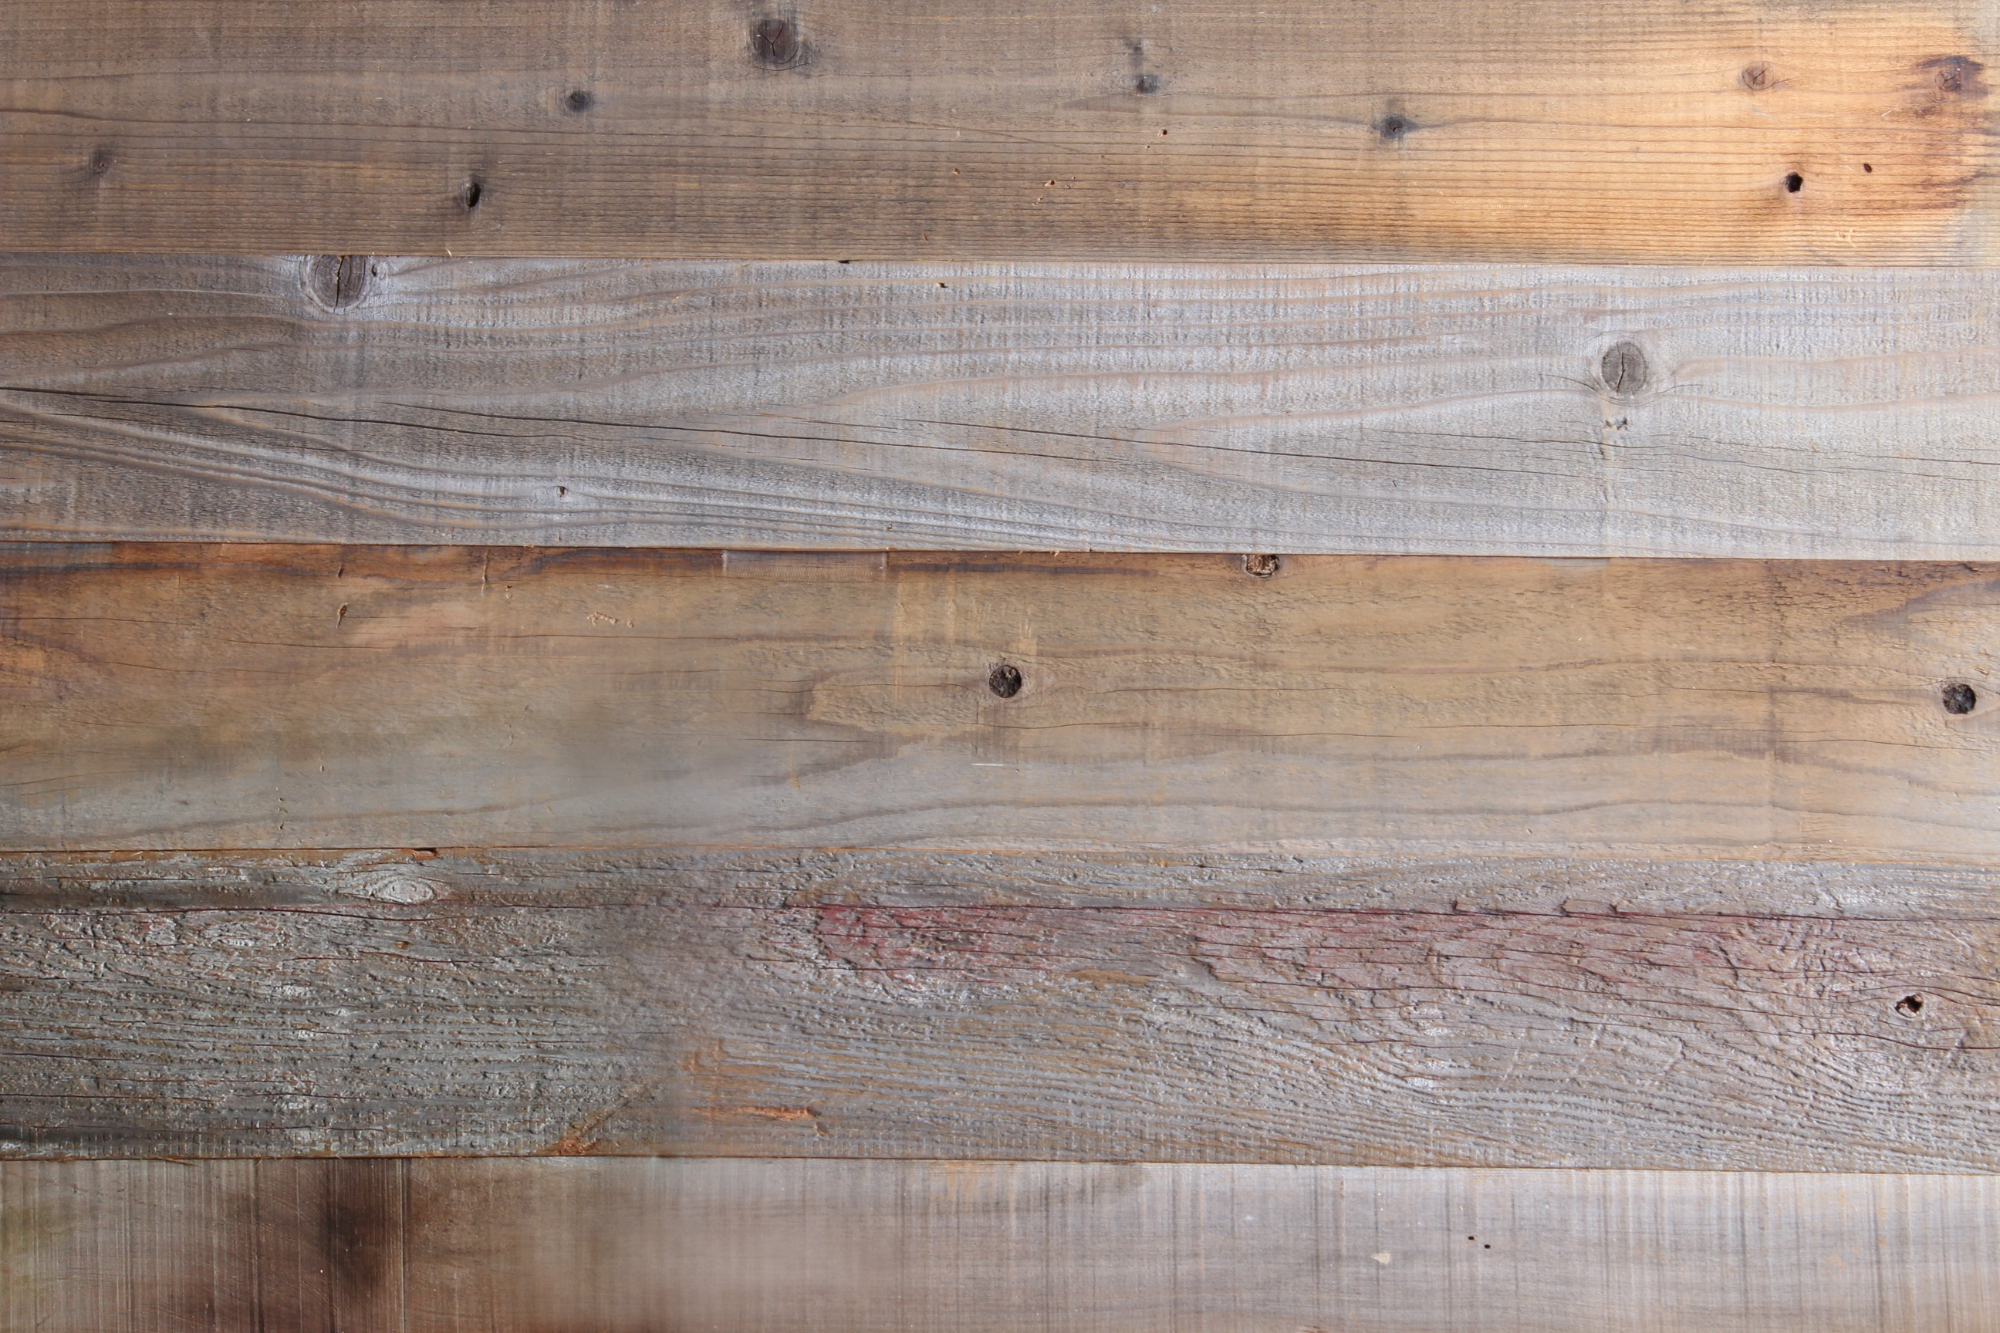 redwood plank texture